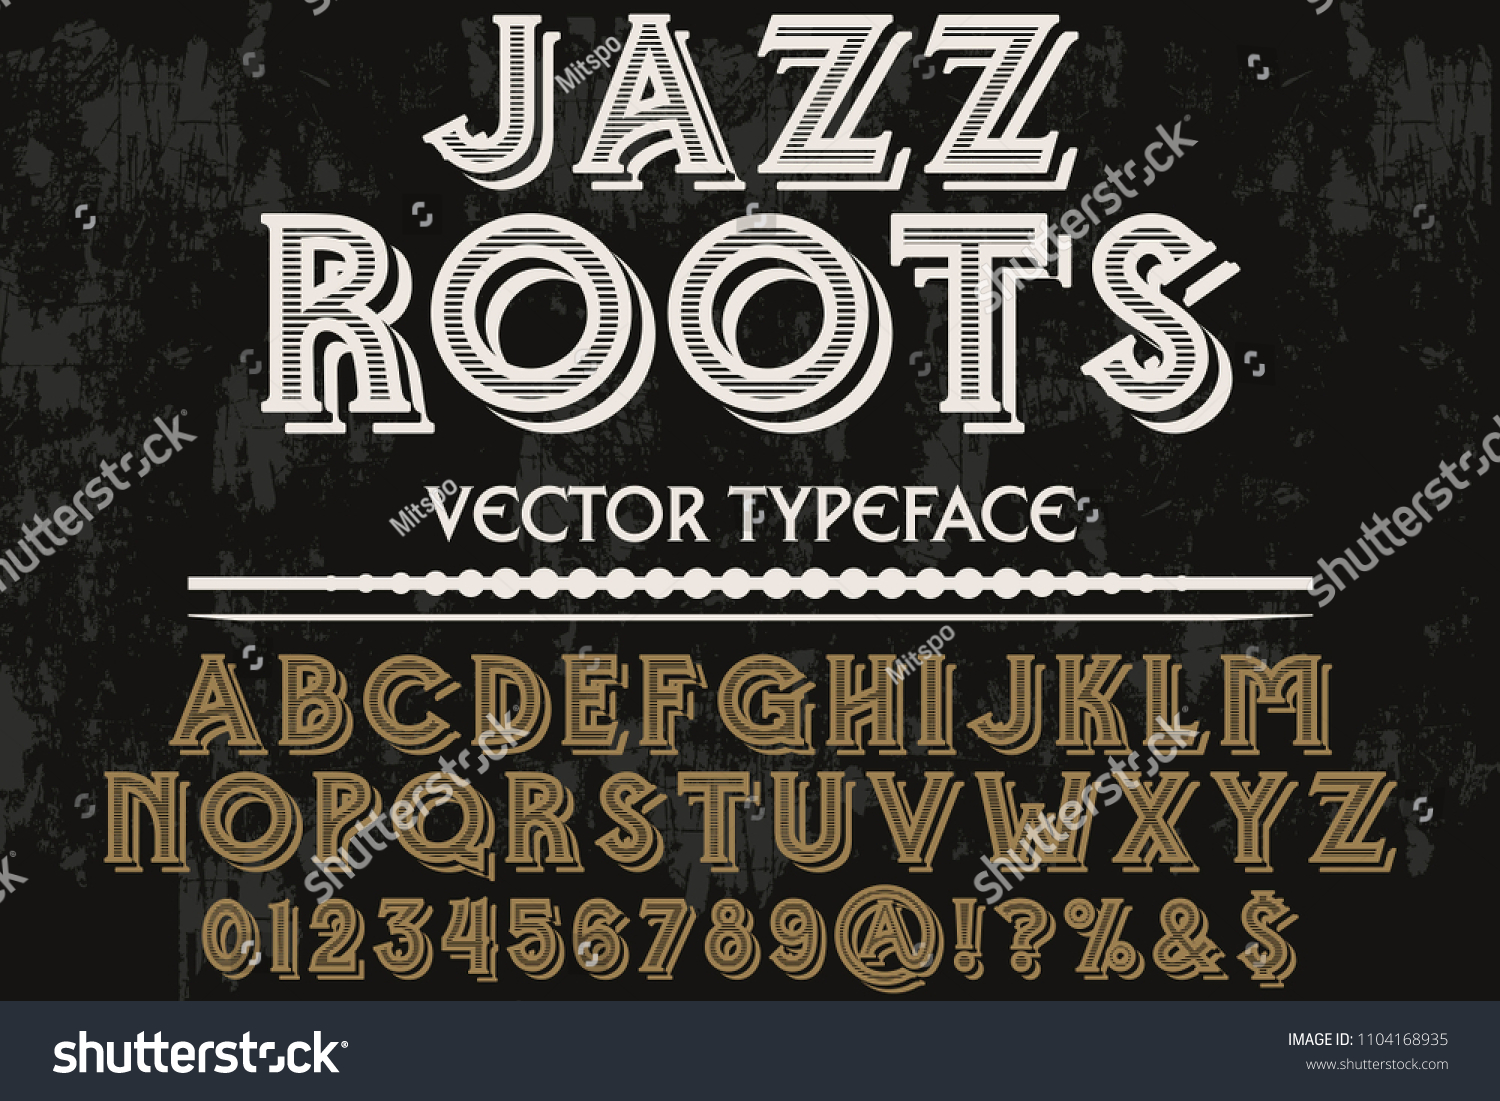 Font Alphabet Script Typeface Handcrafted Handwritten Stock Vector Royalty Free